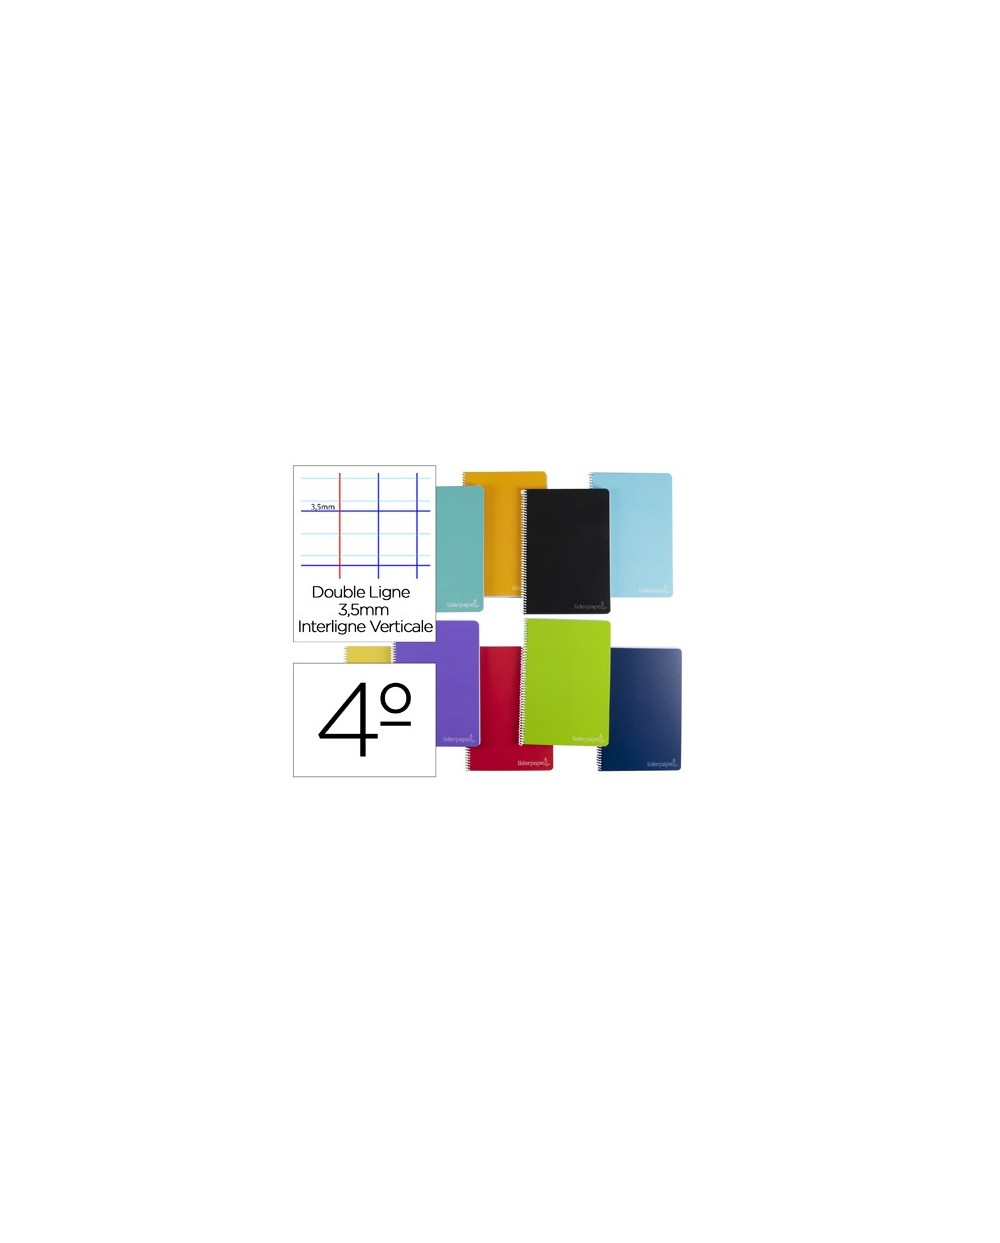 Cuaderno espiral liderpapel cuarto witty tapa dura 80h 75gr rayado montessori 35 mm colores surtidos